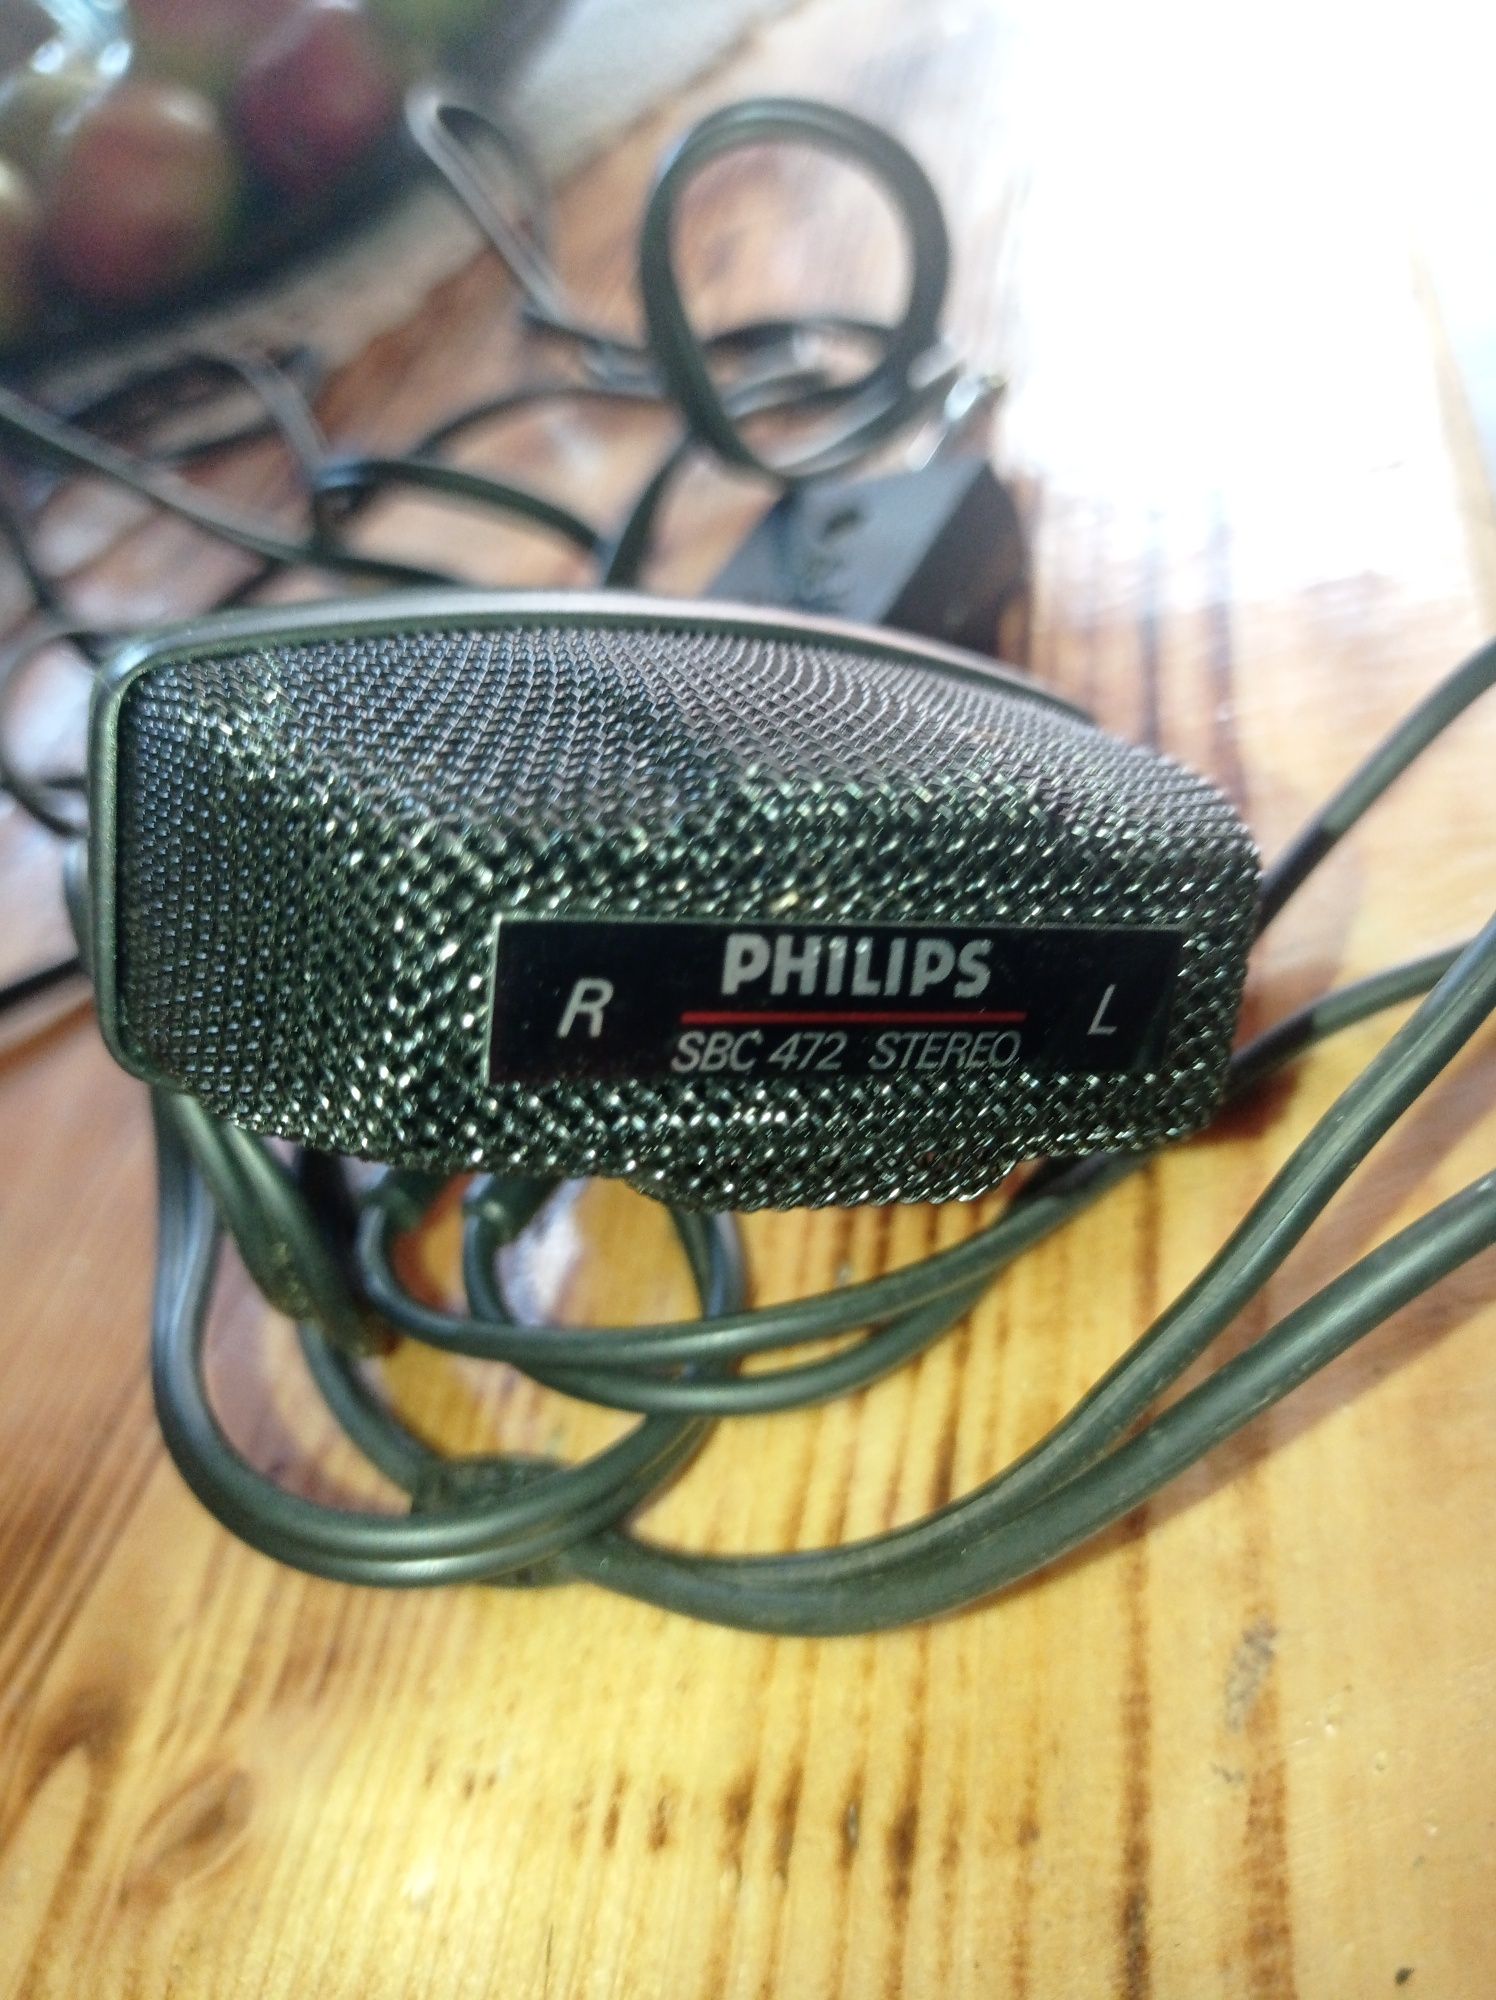 Philips sbc 472 stereo microfon